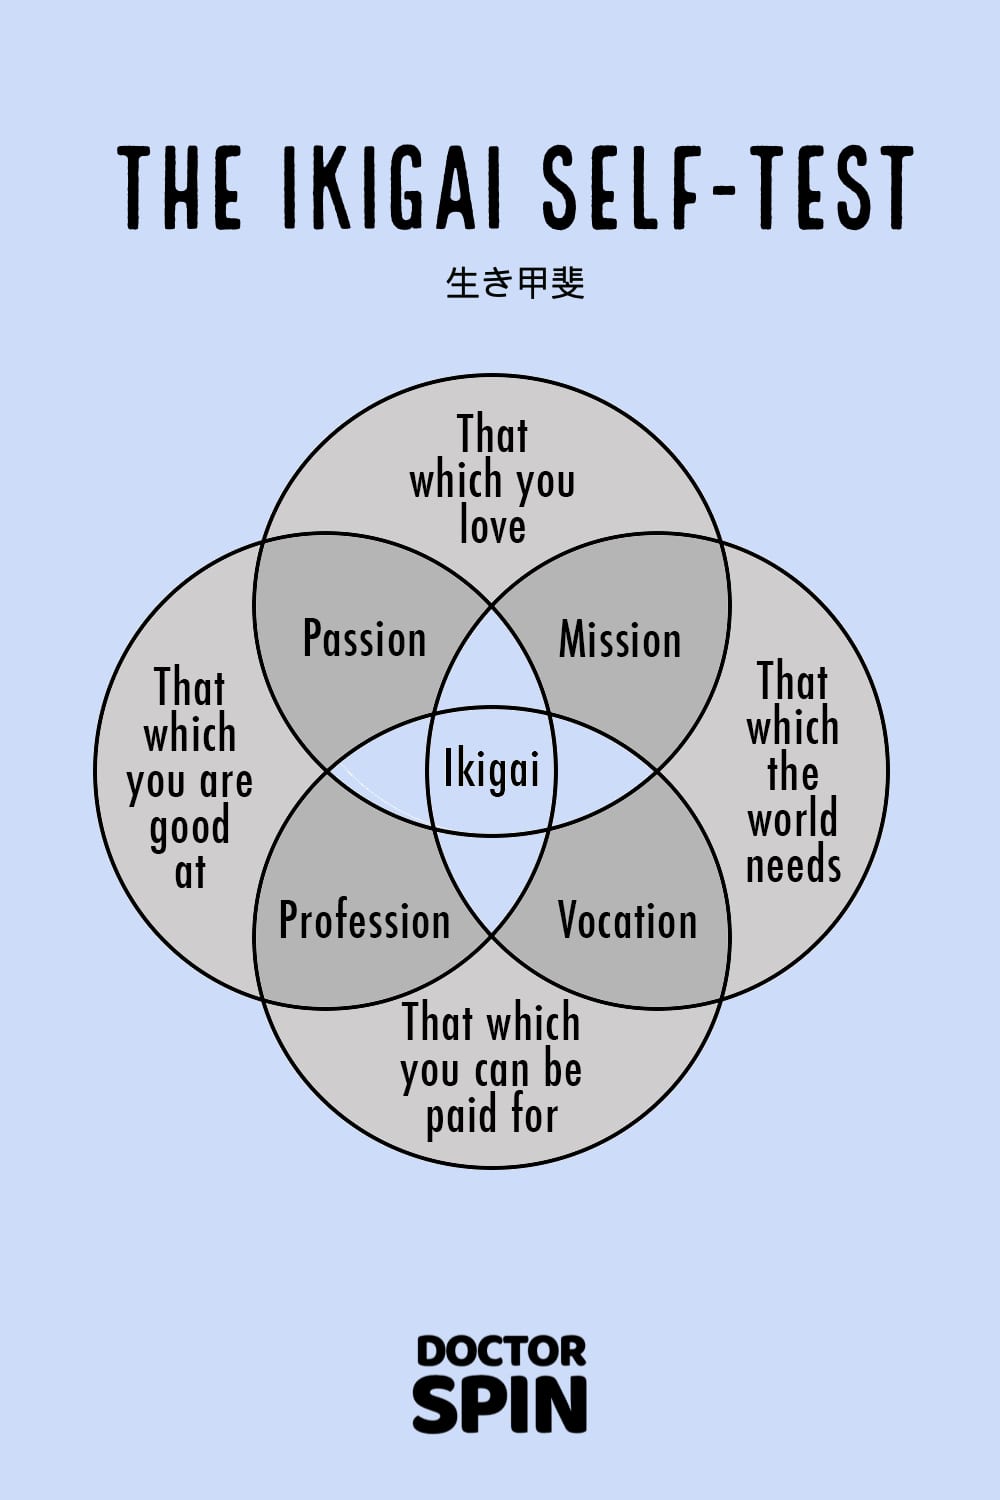 The ikigai self-test